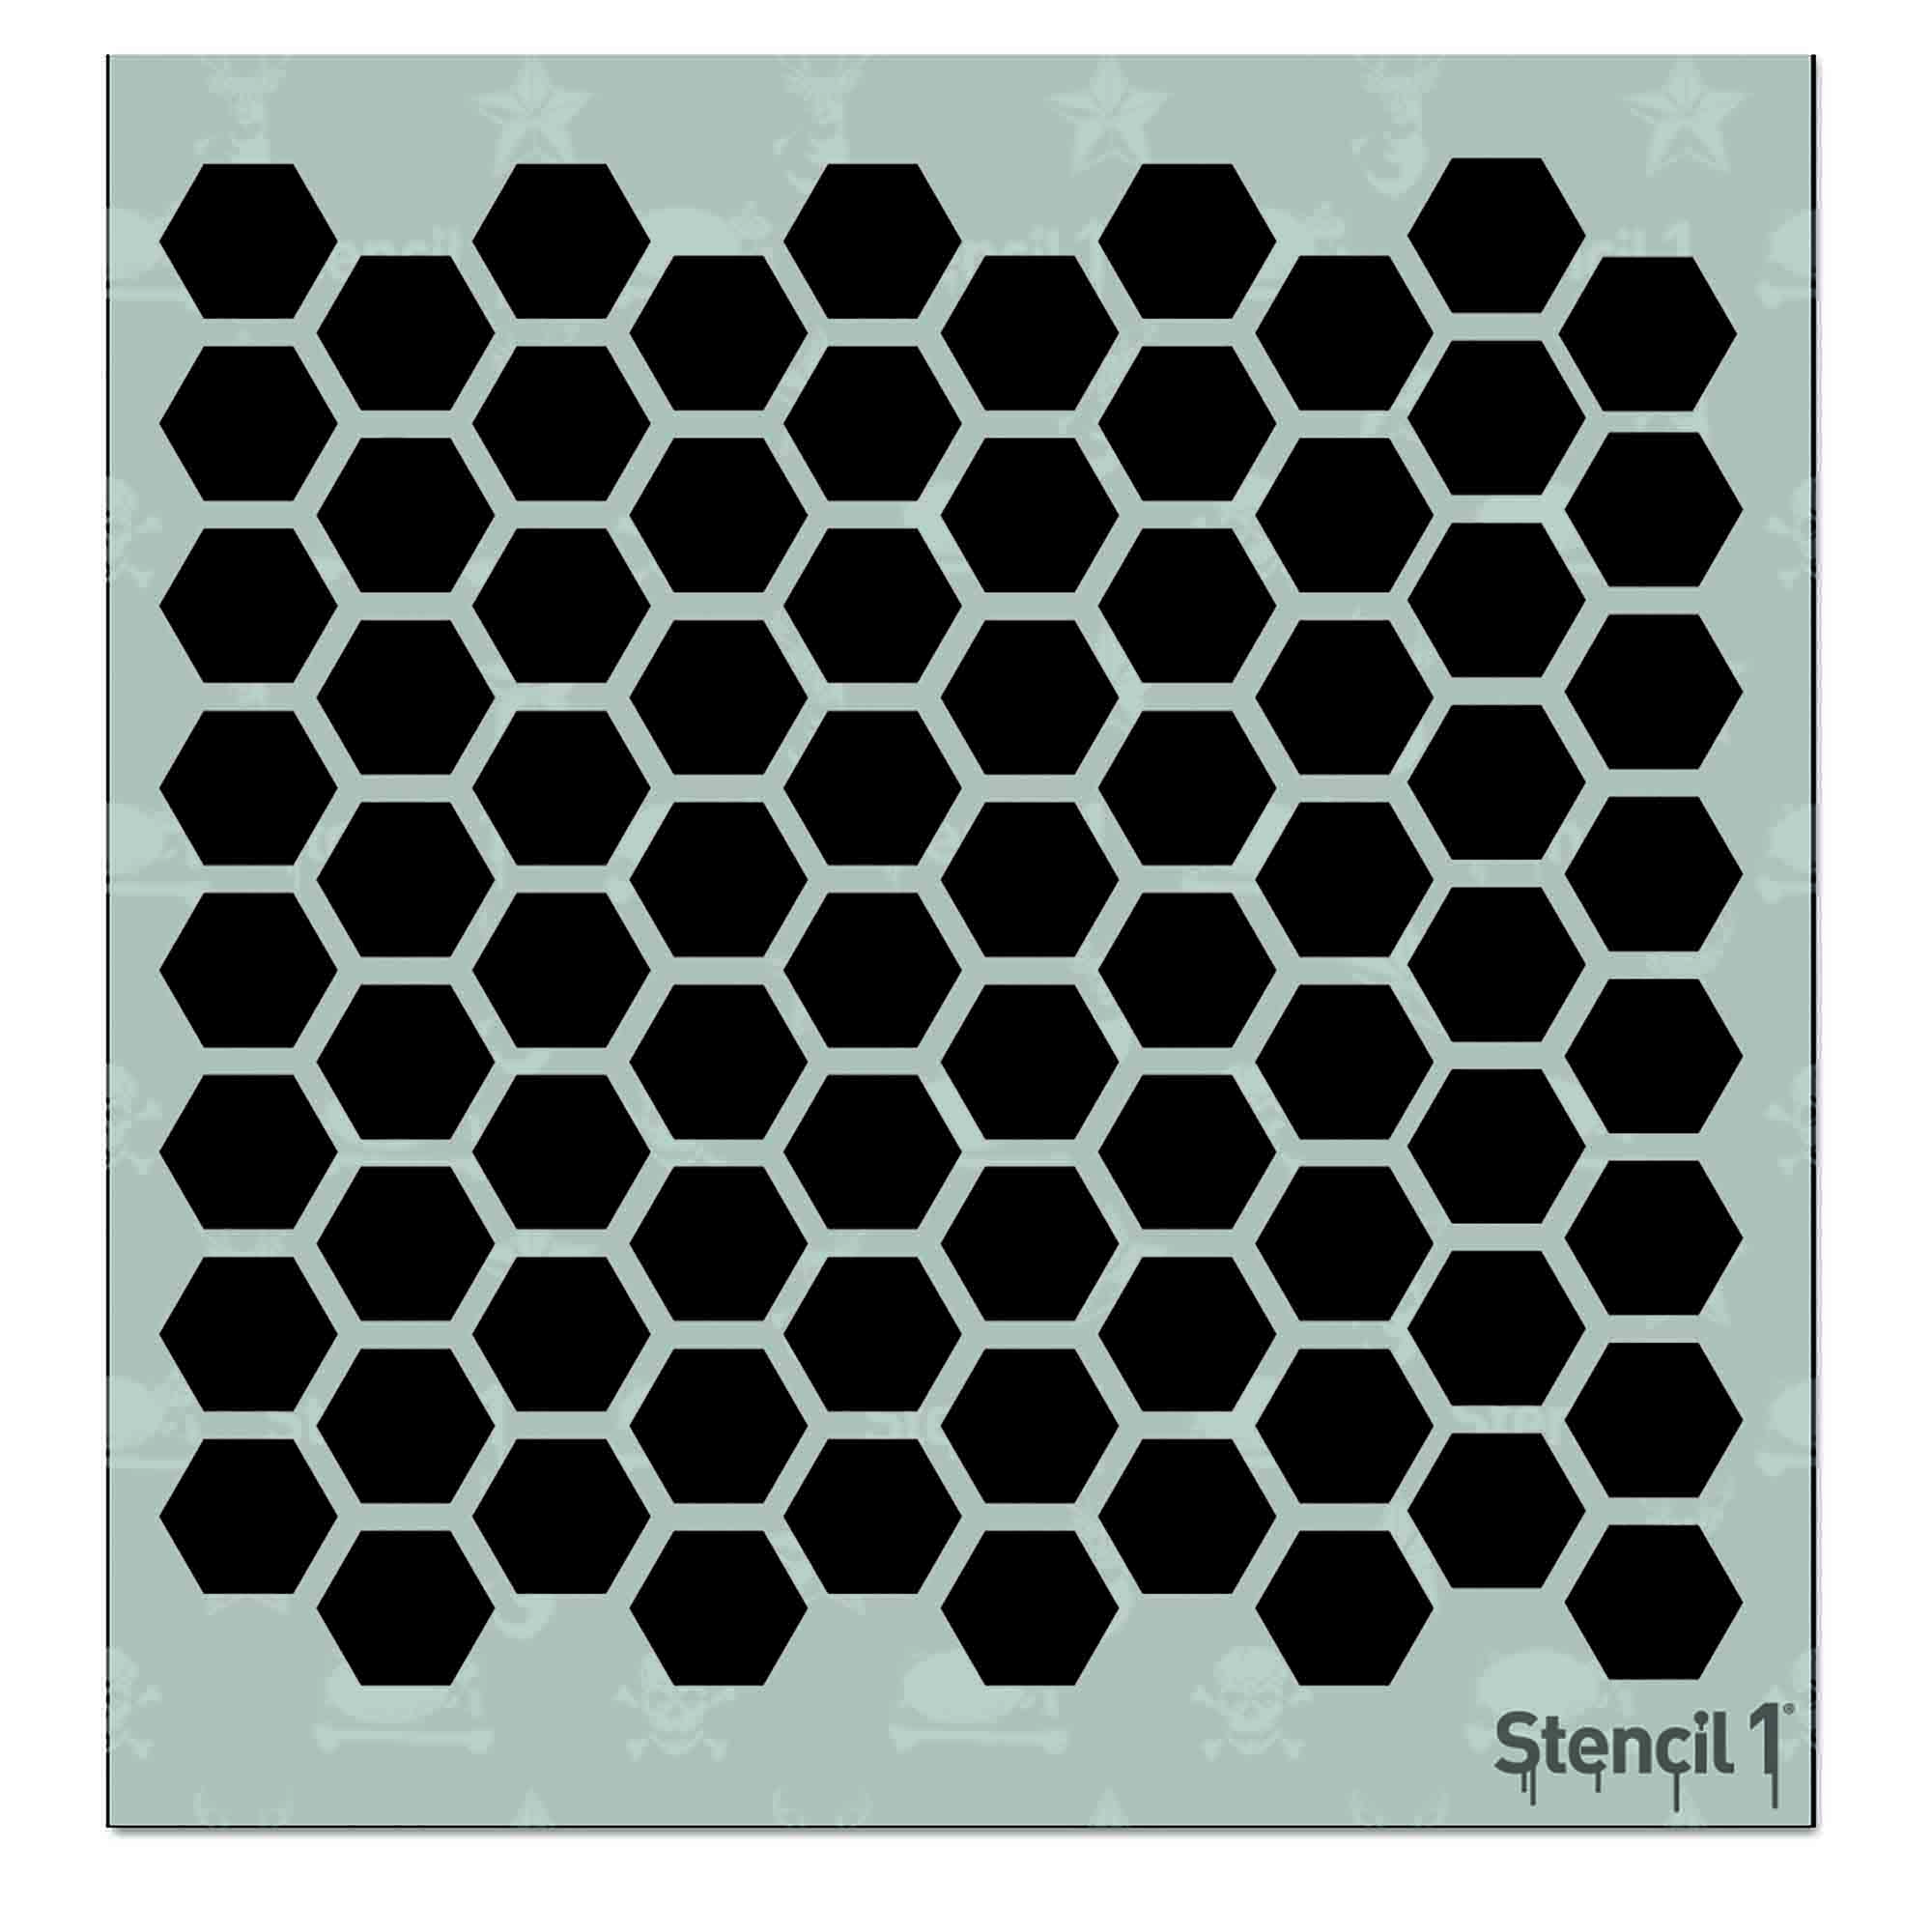 Snowflakes Stencil -Small (5.75x6)